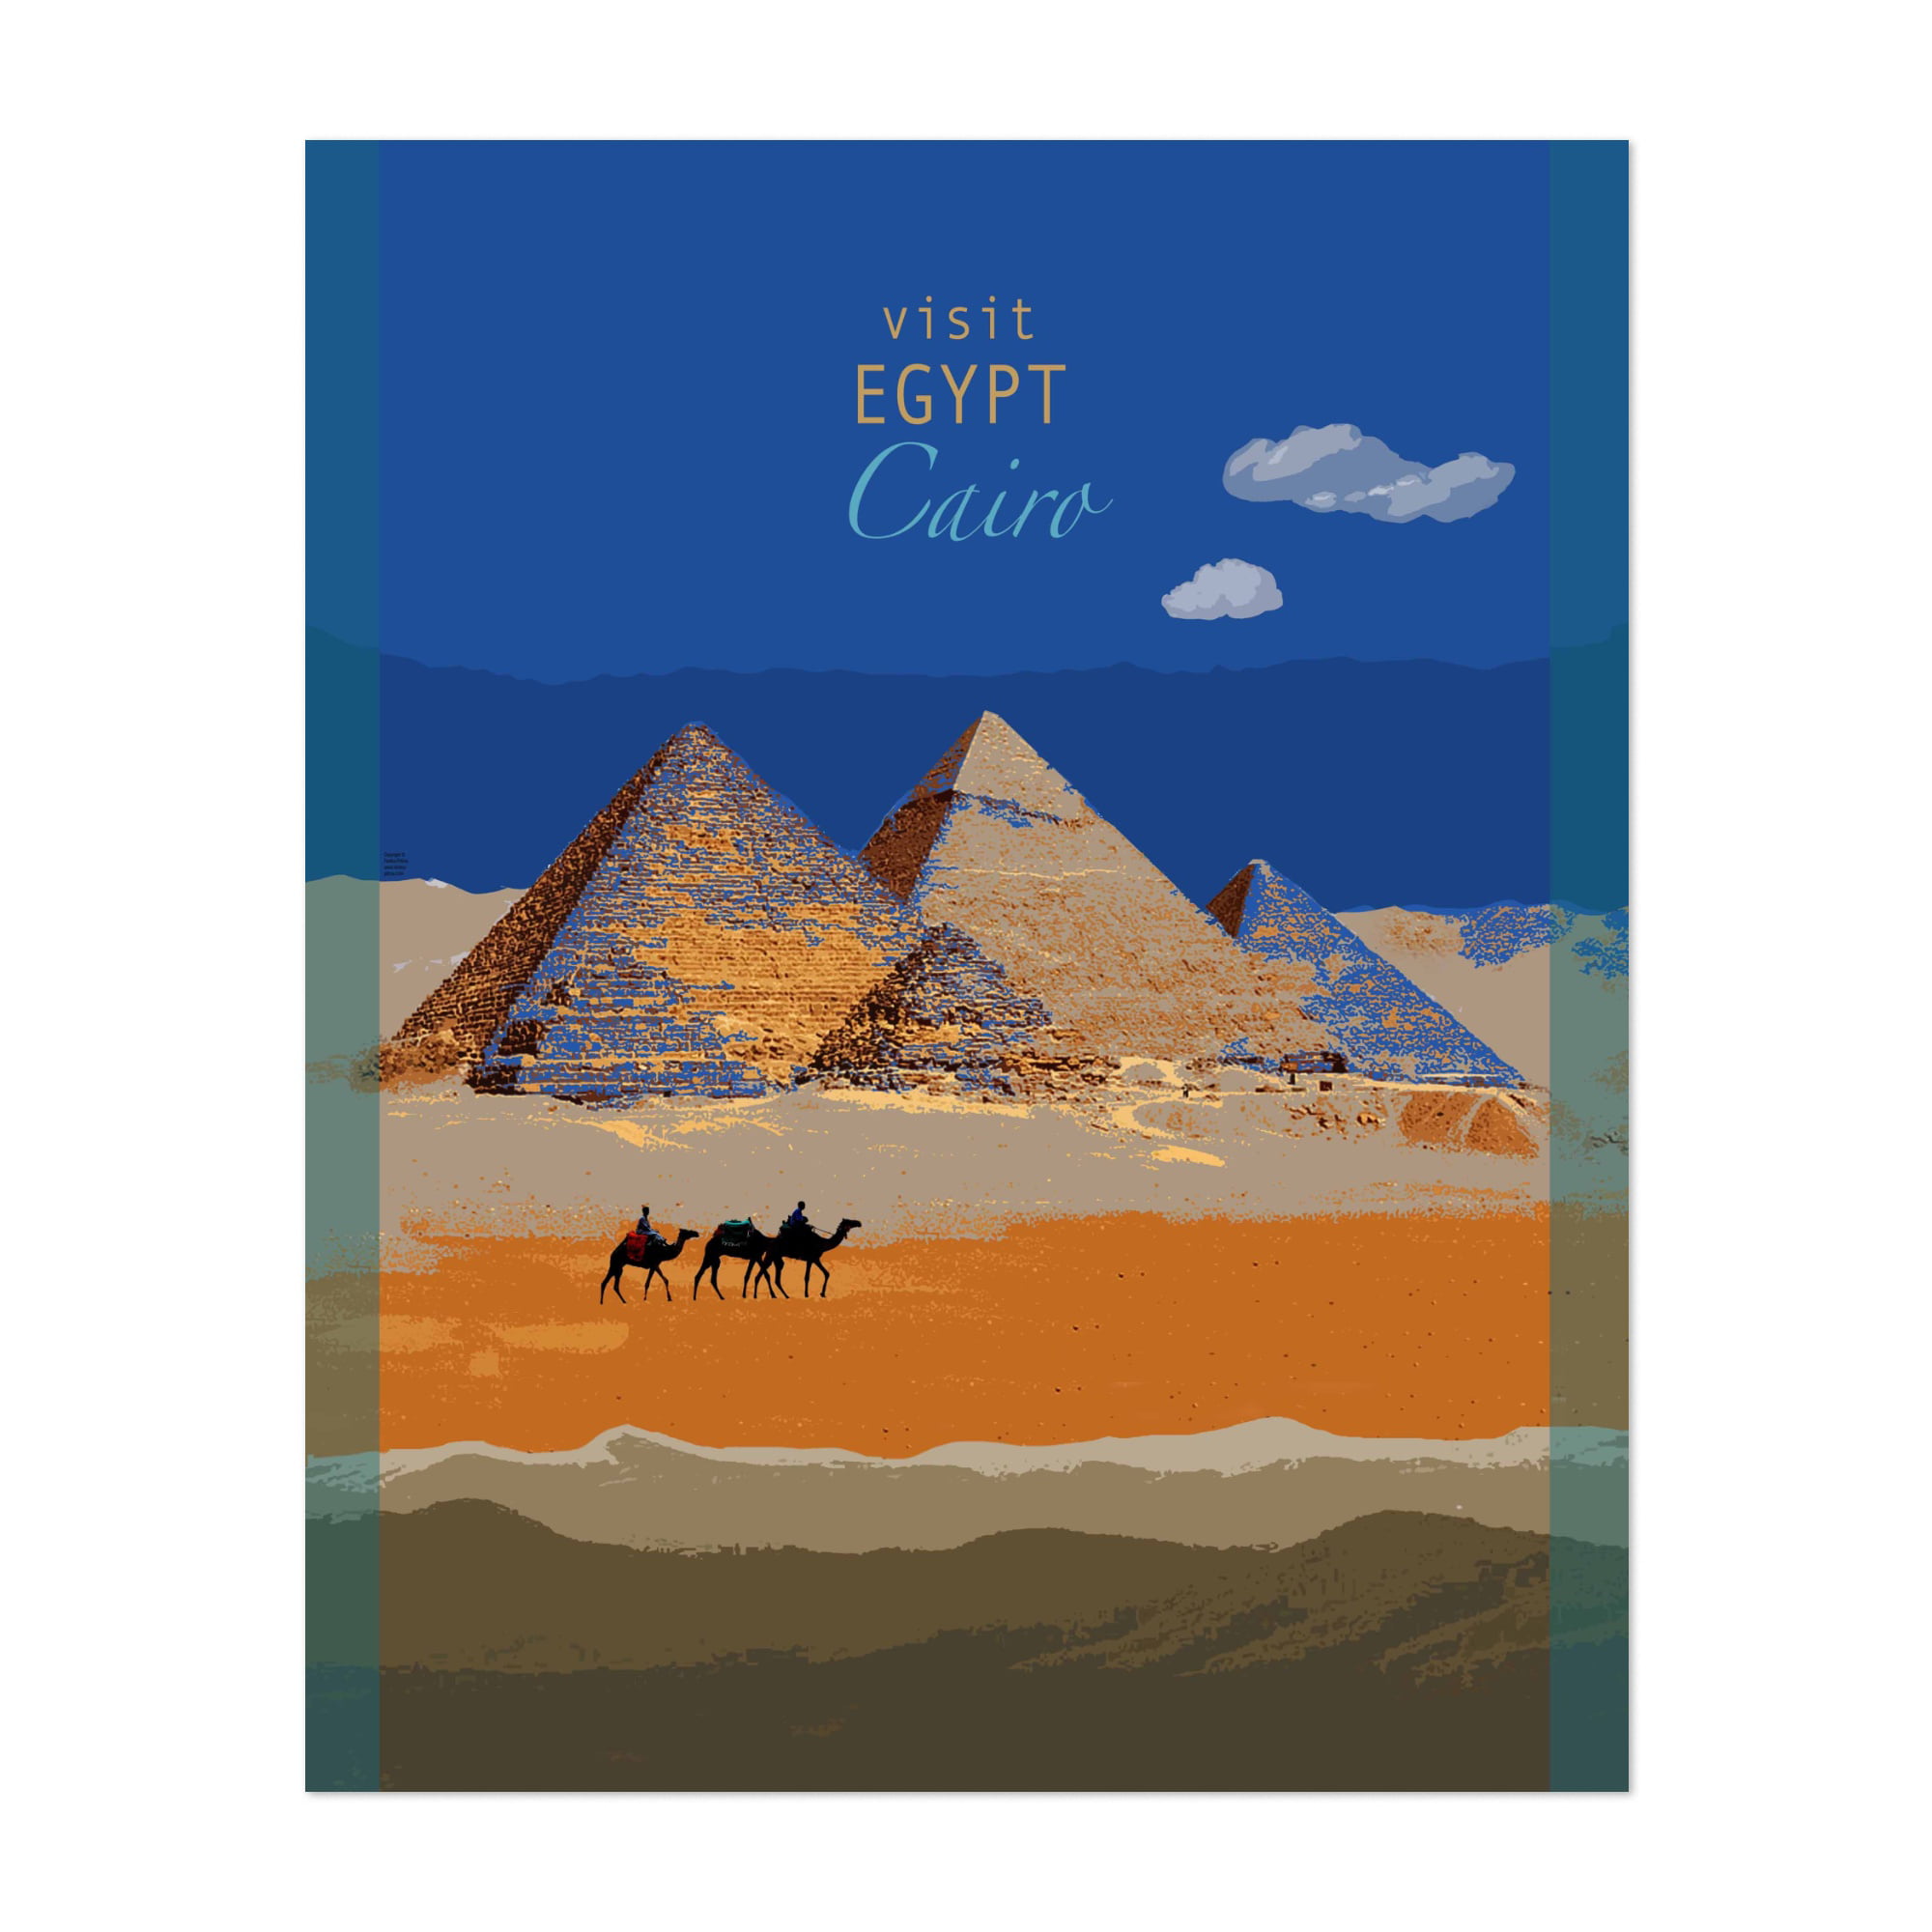 Cairo Sphinx Cat Ancient Egypt Egyptian Pyramids Travel Art Poster Advertisement 